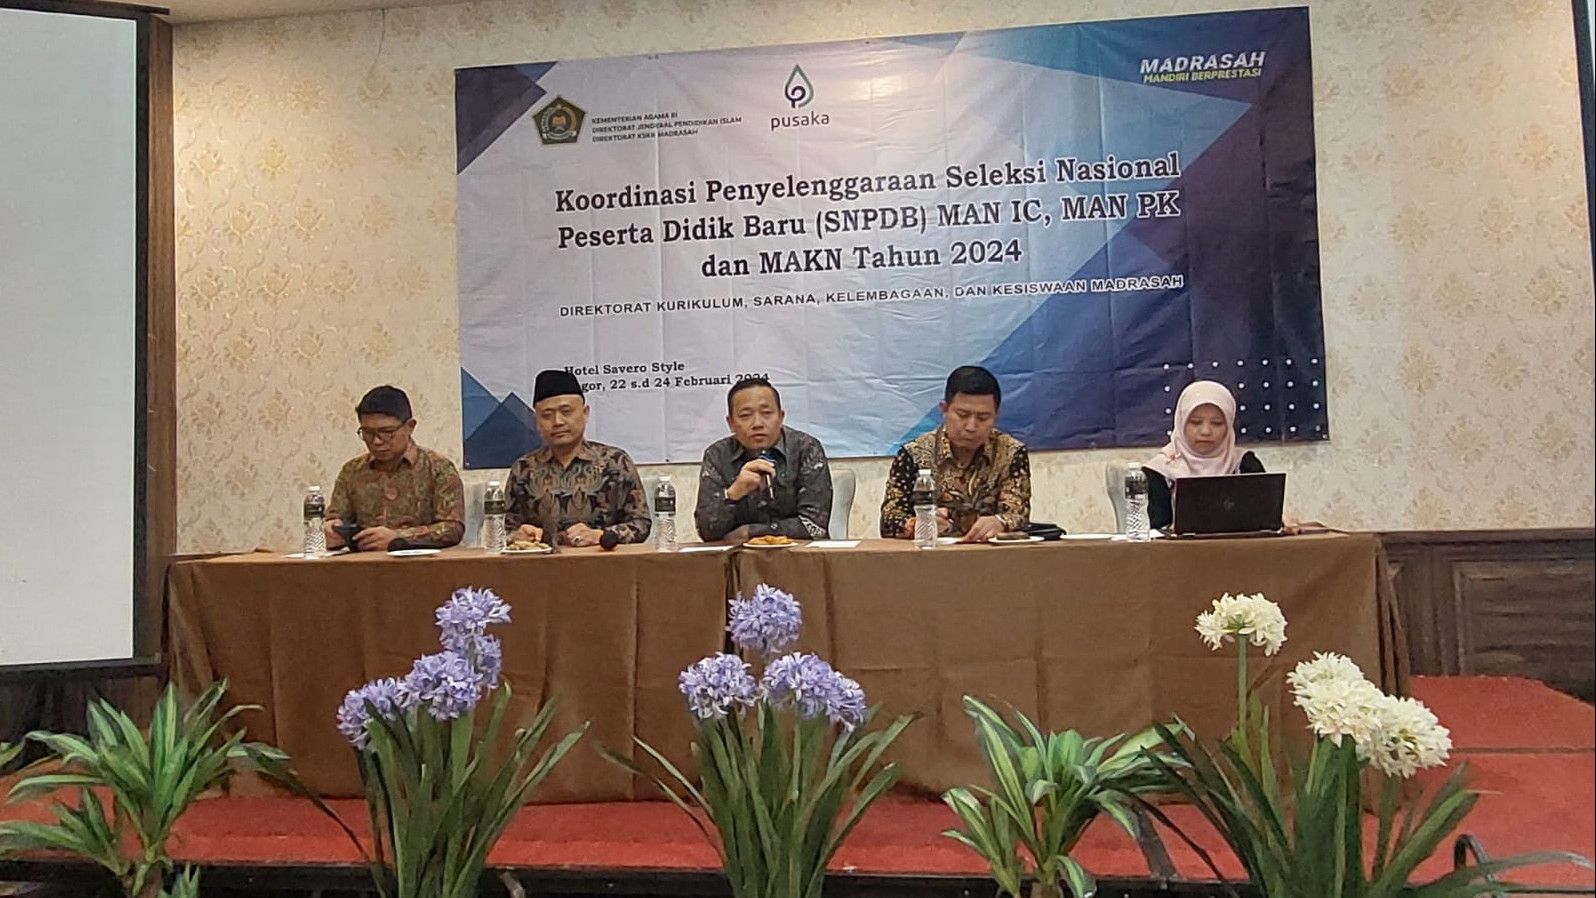 Direktur KSKK Madrasah Sidik Sisdiyanto sedang memimpin Rapat Koordinasi SNPDB